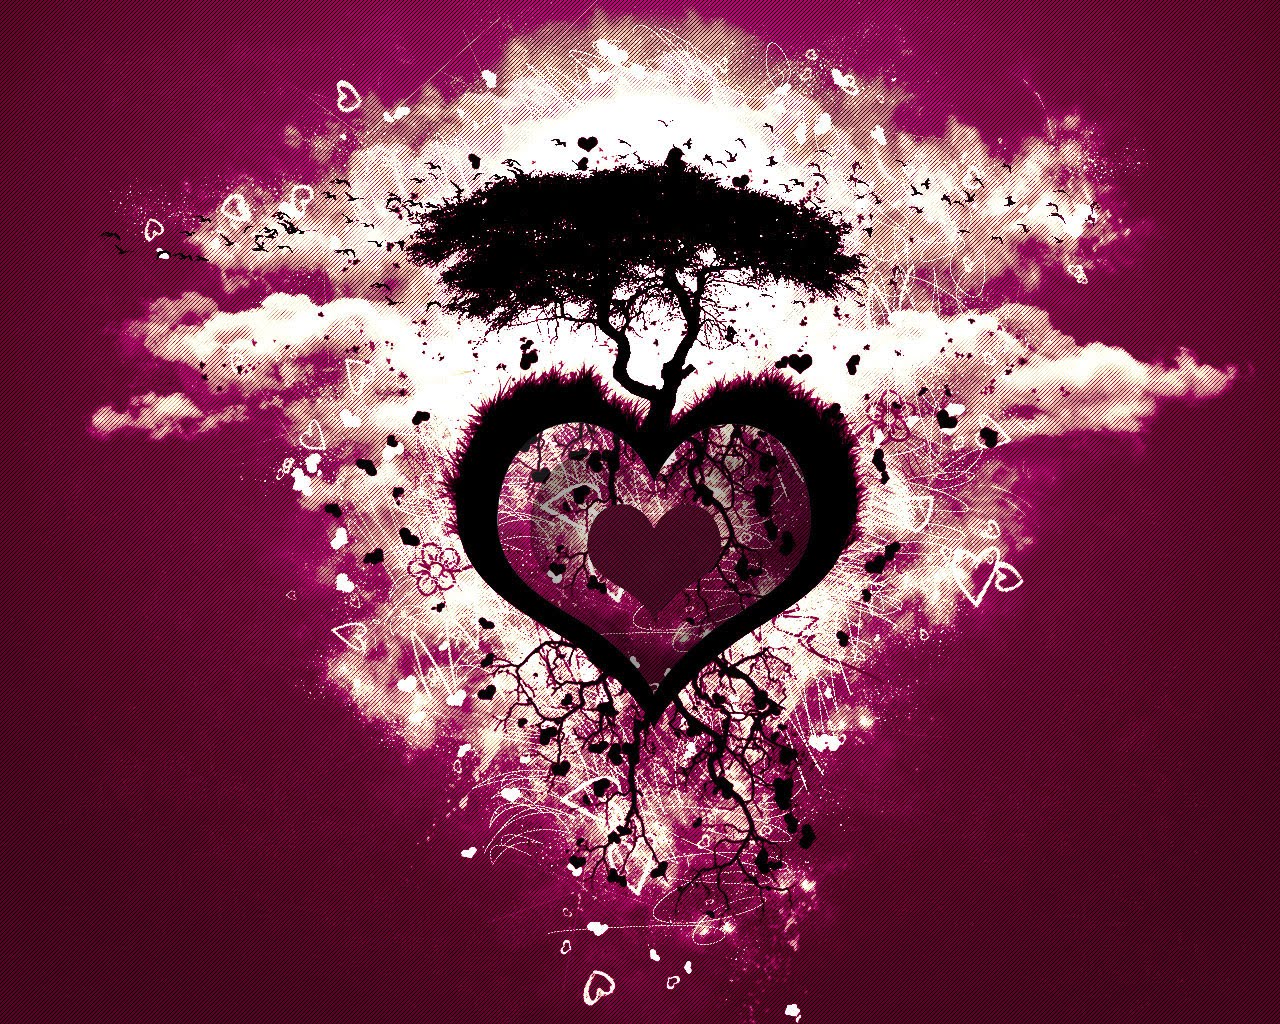 https://blogger.googleusercontent.com/img/b/R29vZ2xl/AVvXsEhNIgOKuC6esZdZPp6ACAYIpj8vVkTYC9FiRESMjMwq1W9D1WsGeUZY2ndDkEpdyRDtFUJhmUvIOZht61f6aOXsYfAgDtLFyt3ZTWxZT4R8sDgvs6W-kfkeT10nieEhdkyxiJsHkgVU7Tw/s1600/Purple-heart-love-tree-original.jpg